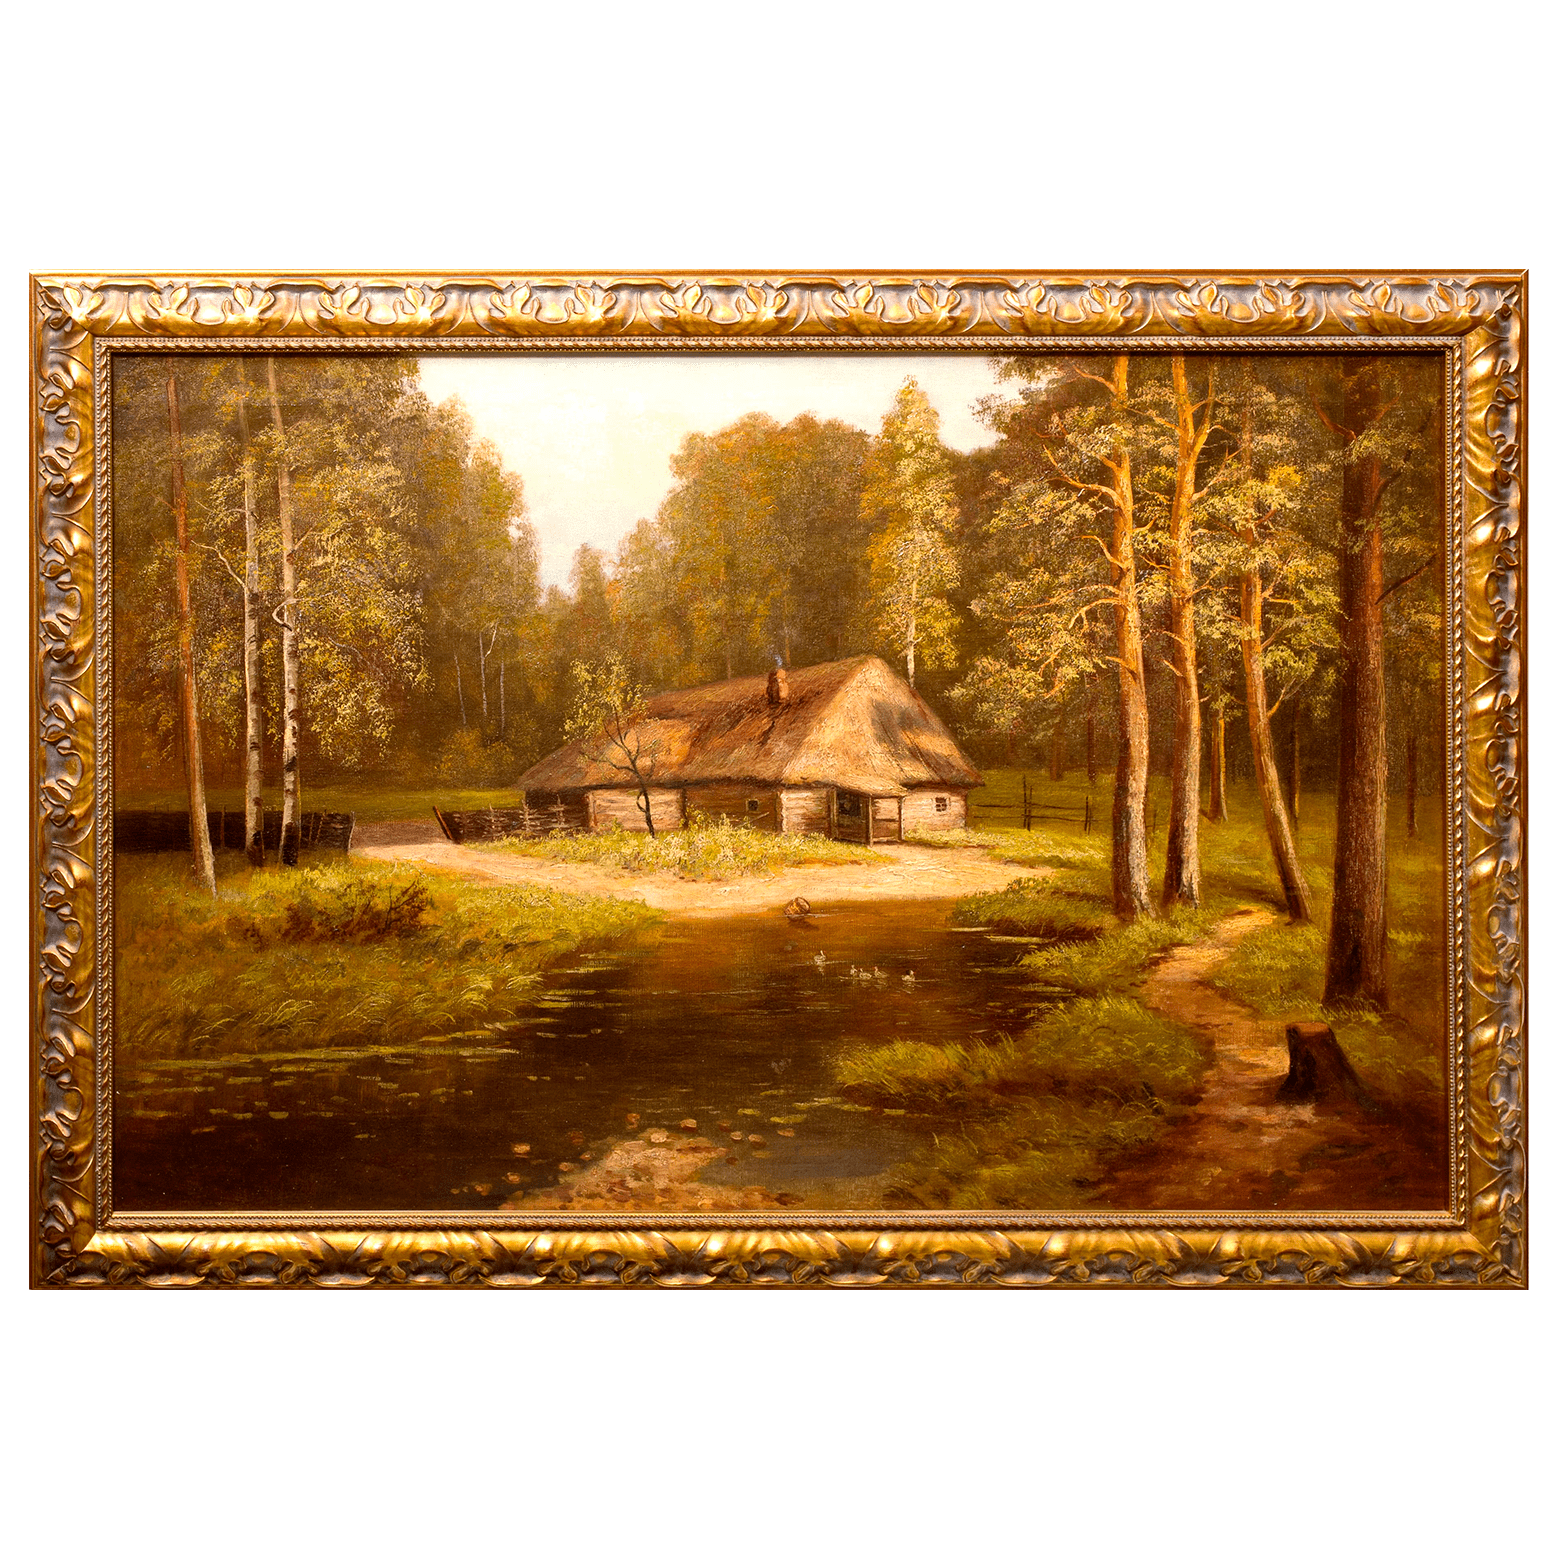 Картина «Домик у лесного озера» конца 19 века, Зап. Европа, холст, масло